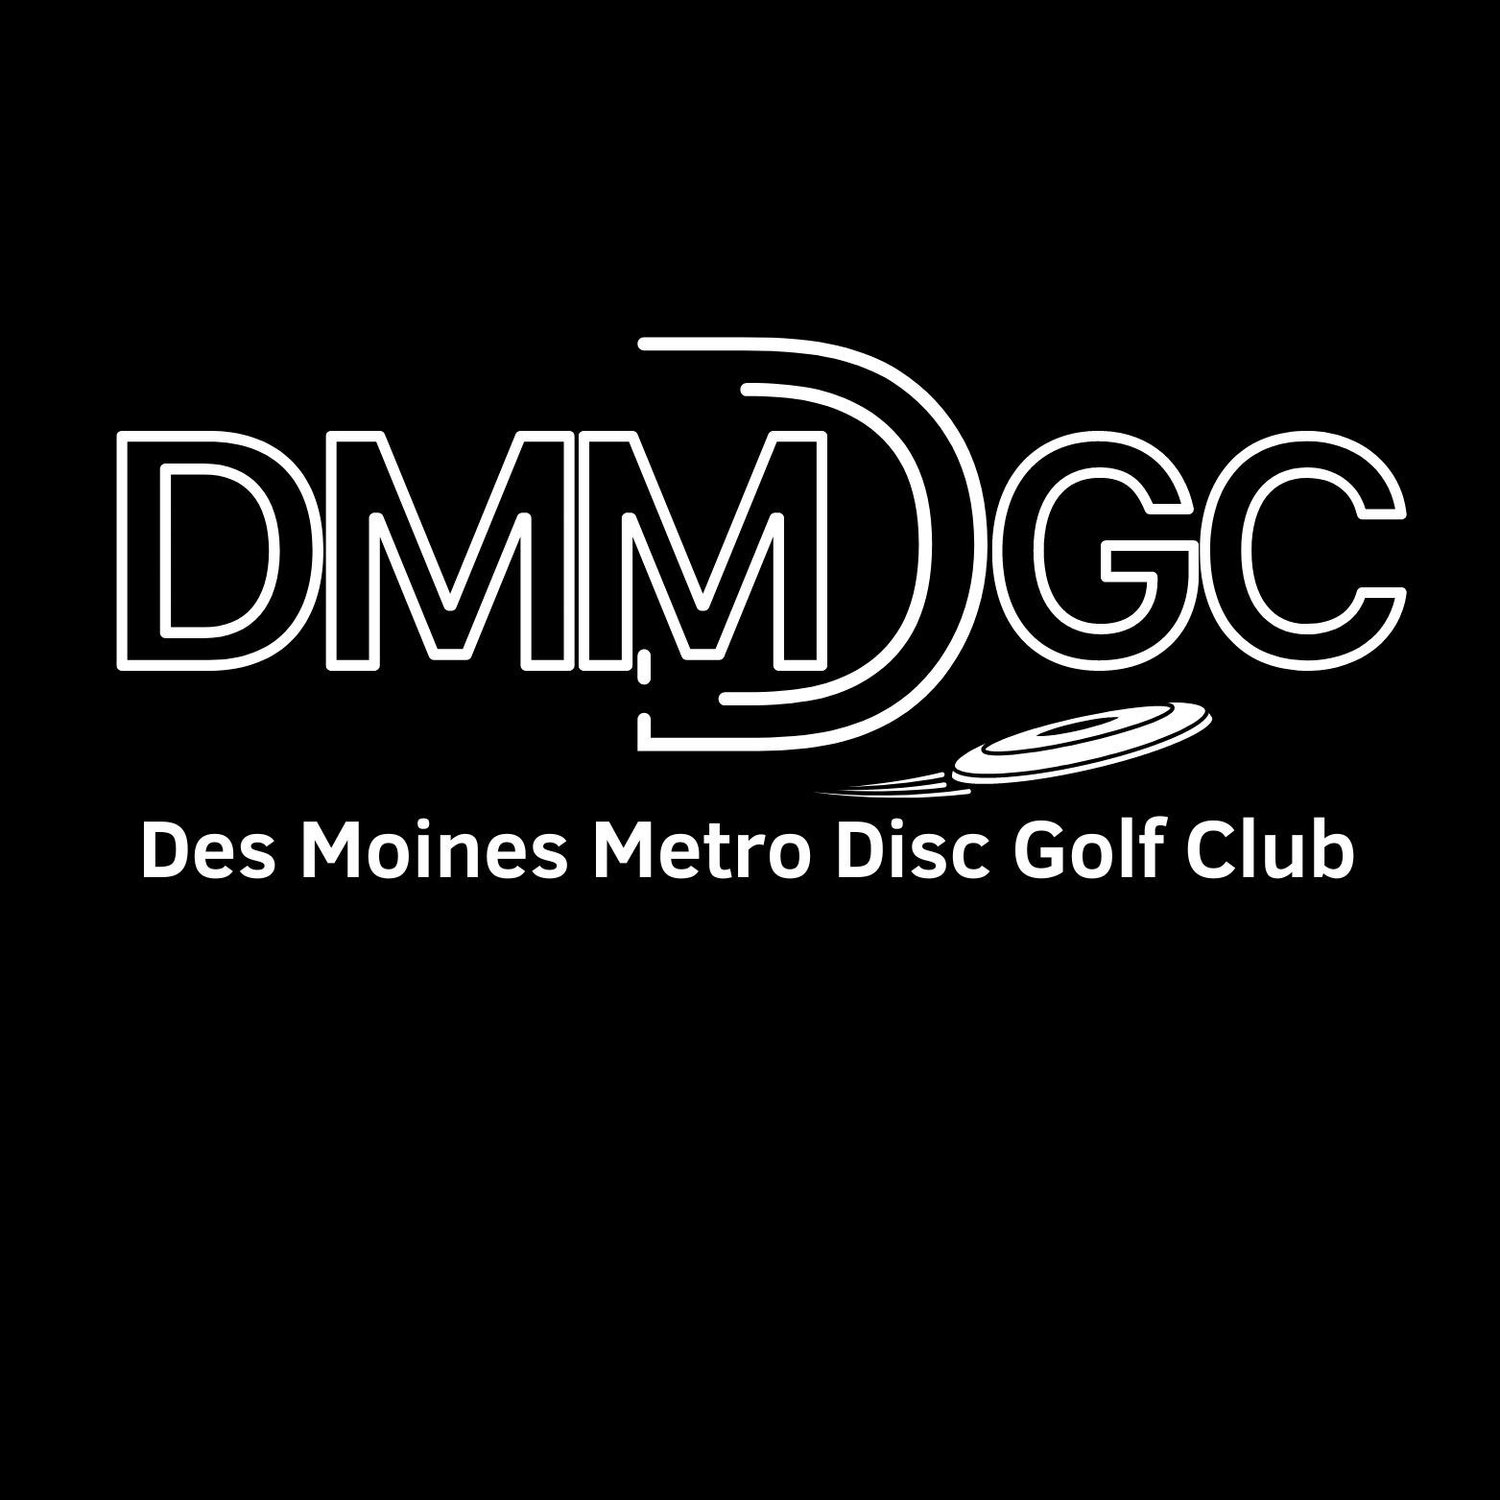 Des Moines Metro Disc Golf Club